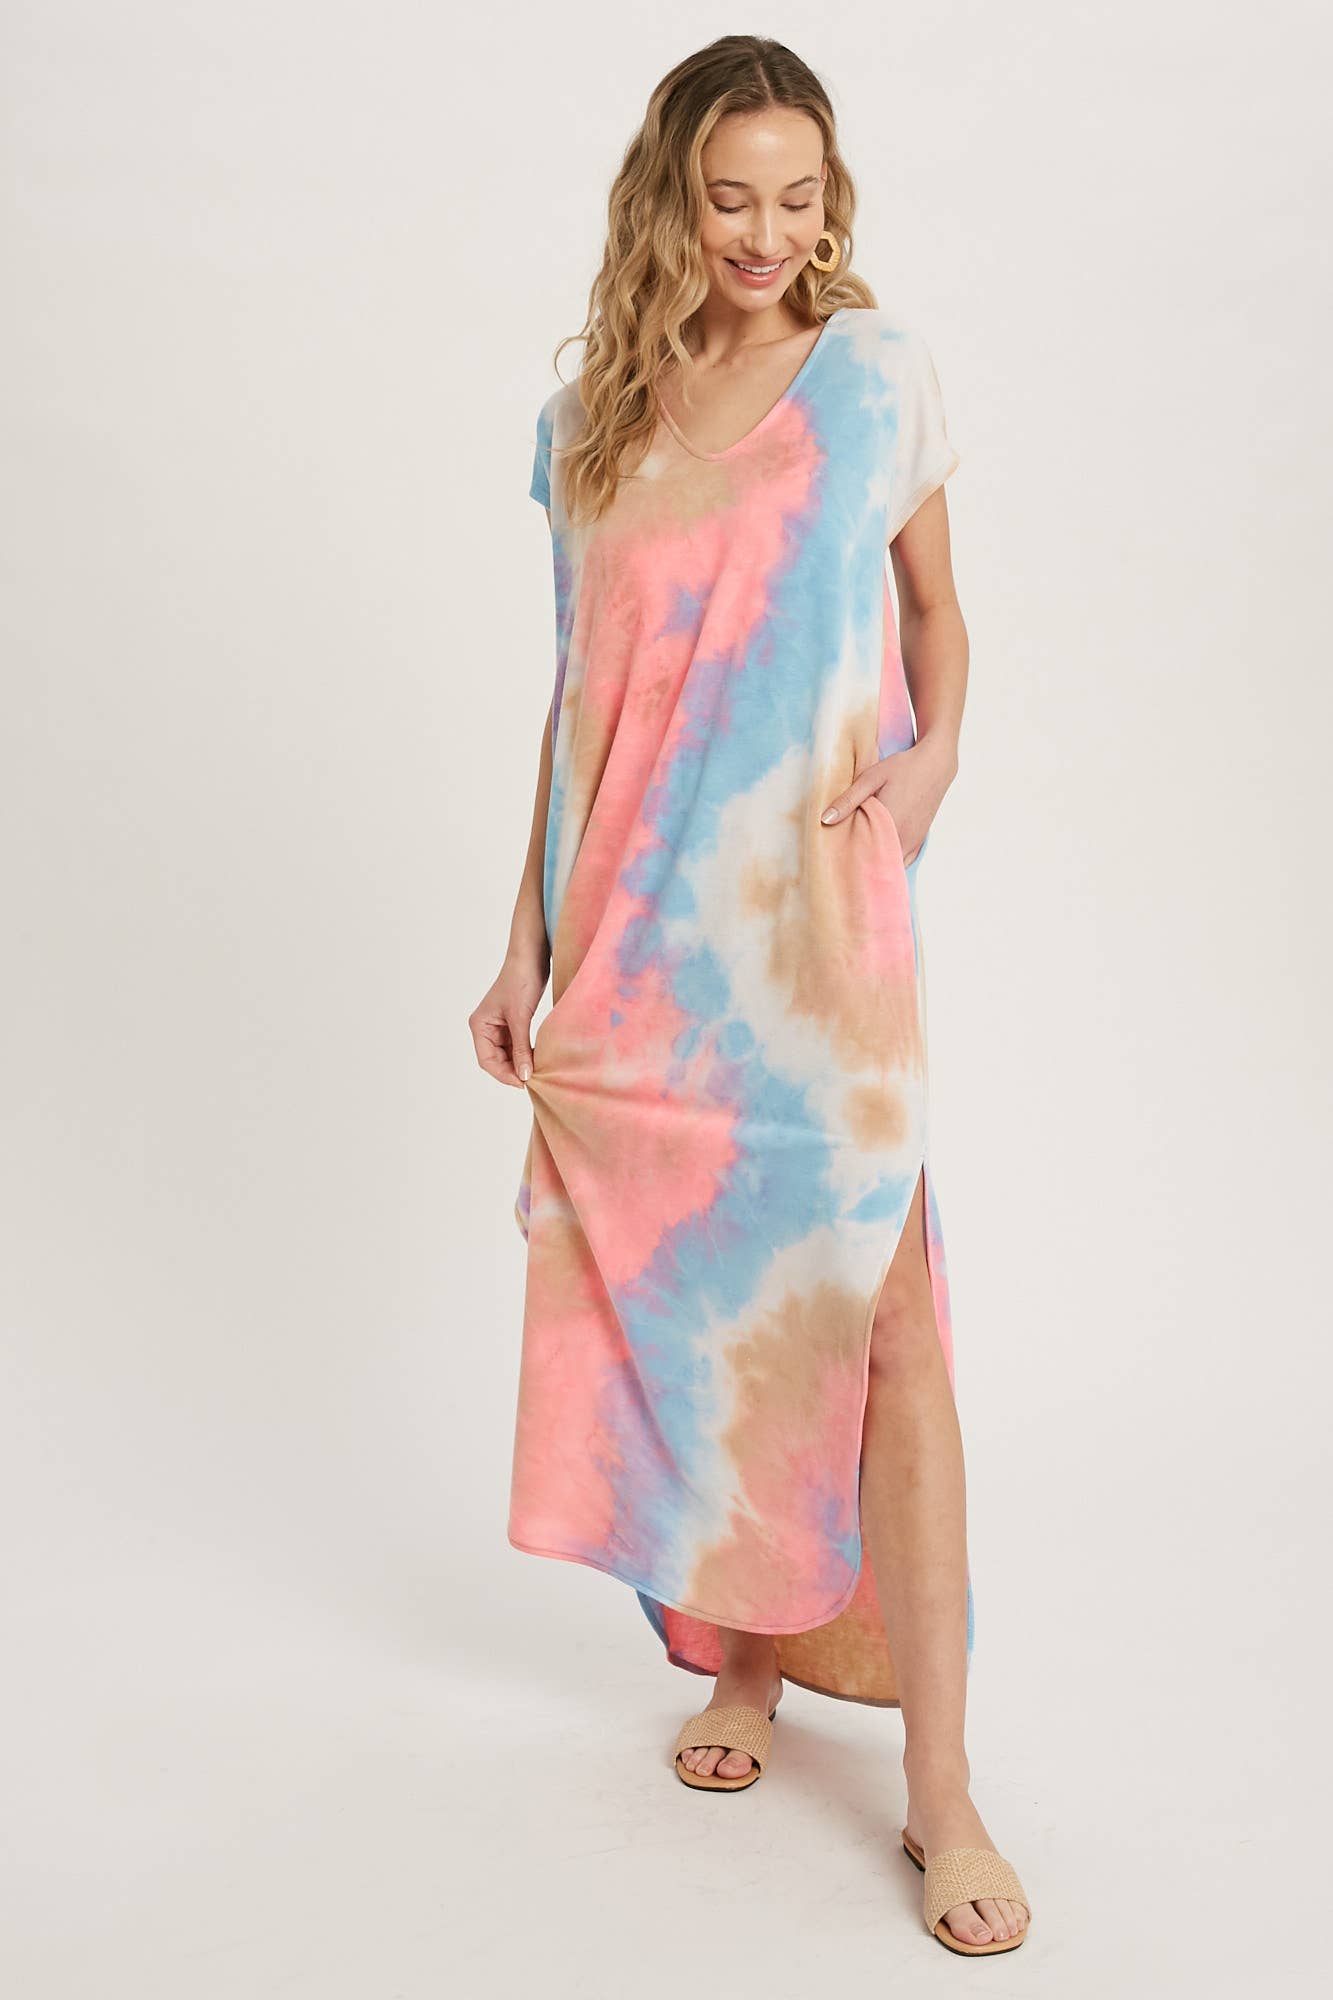 zSALE Capri Tie Dye Maxi Jersey Dress - Aqua & Pink